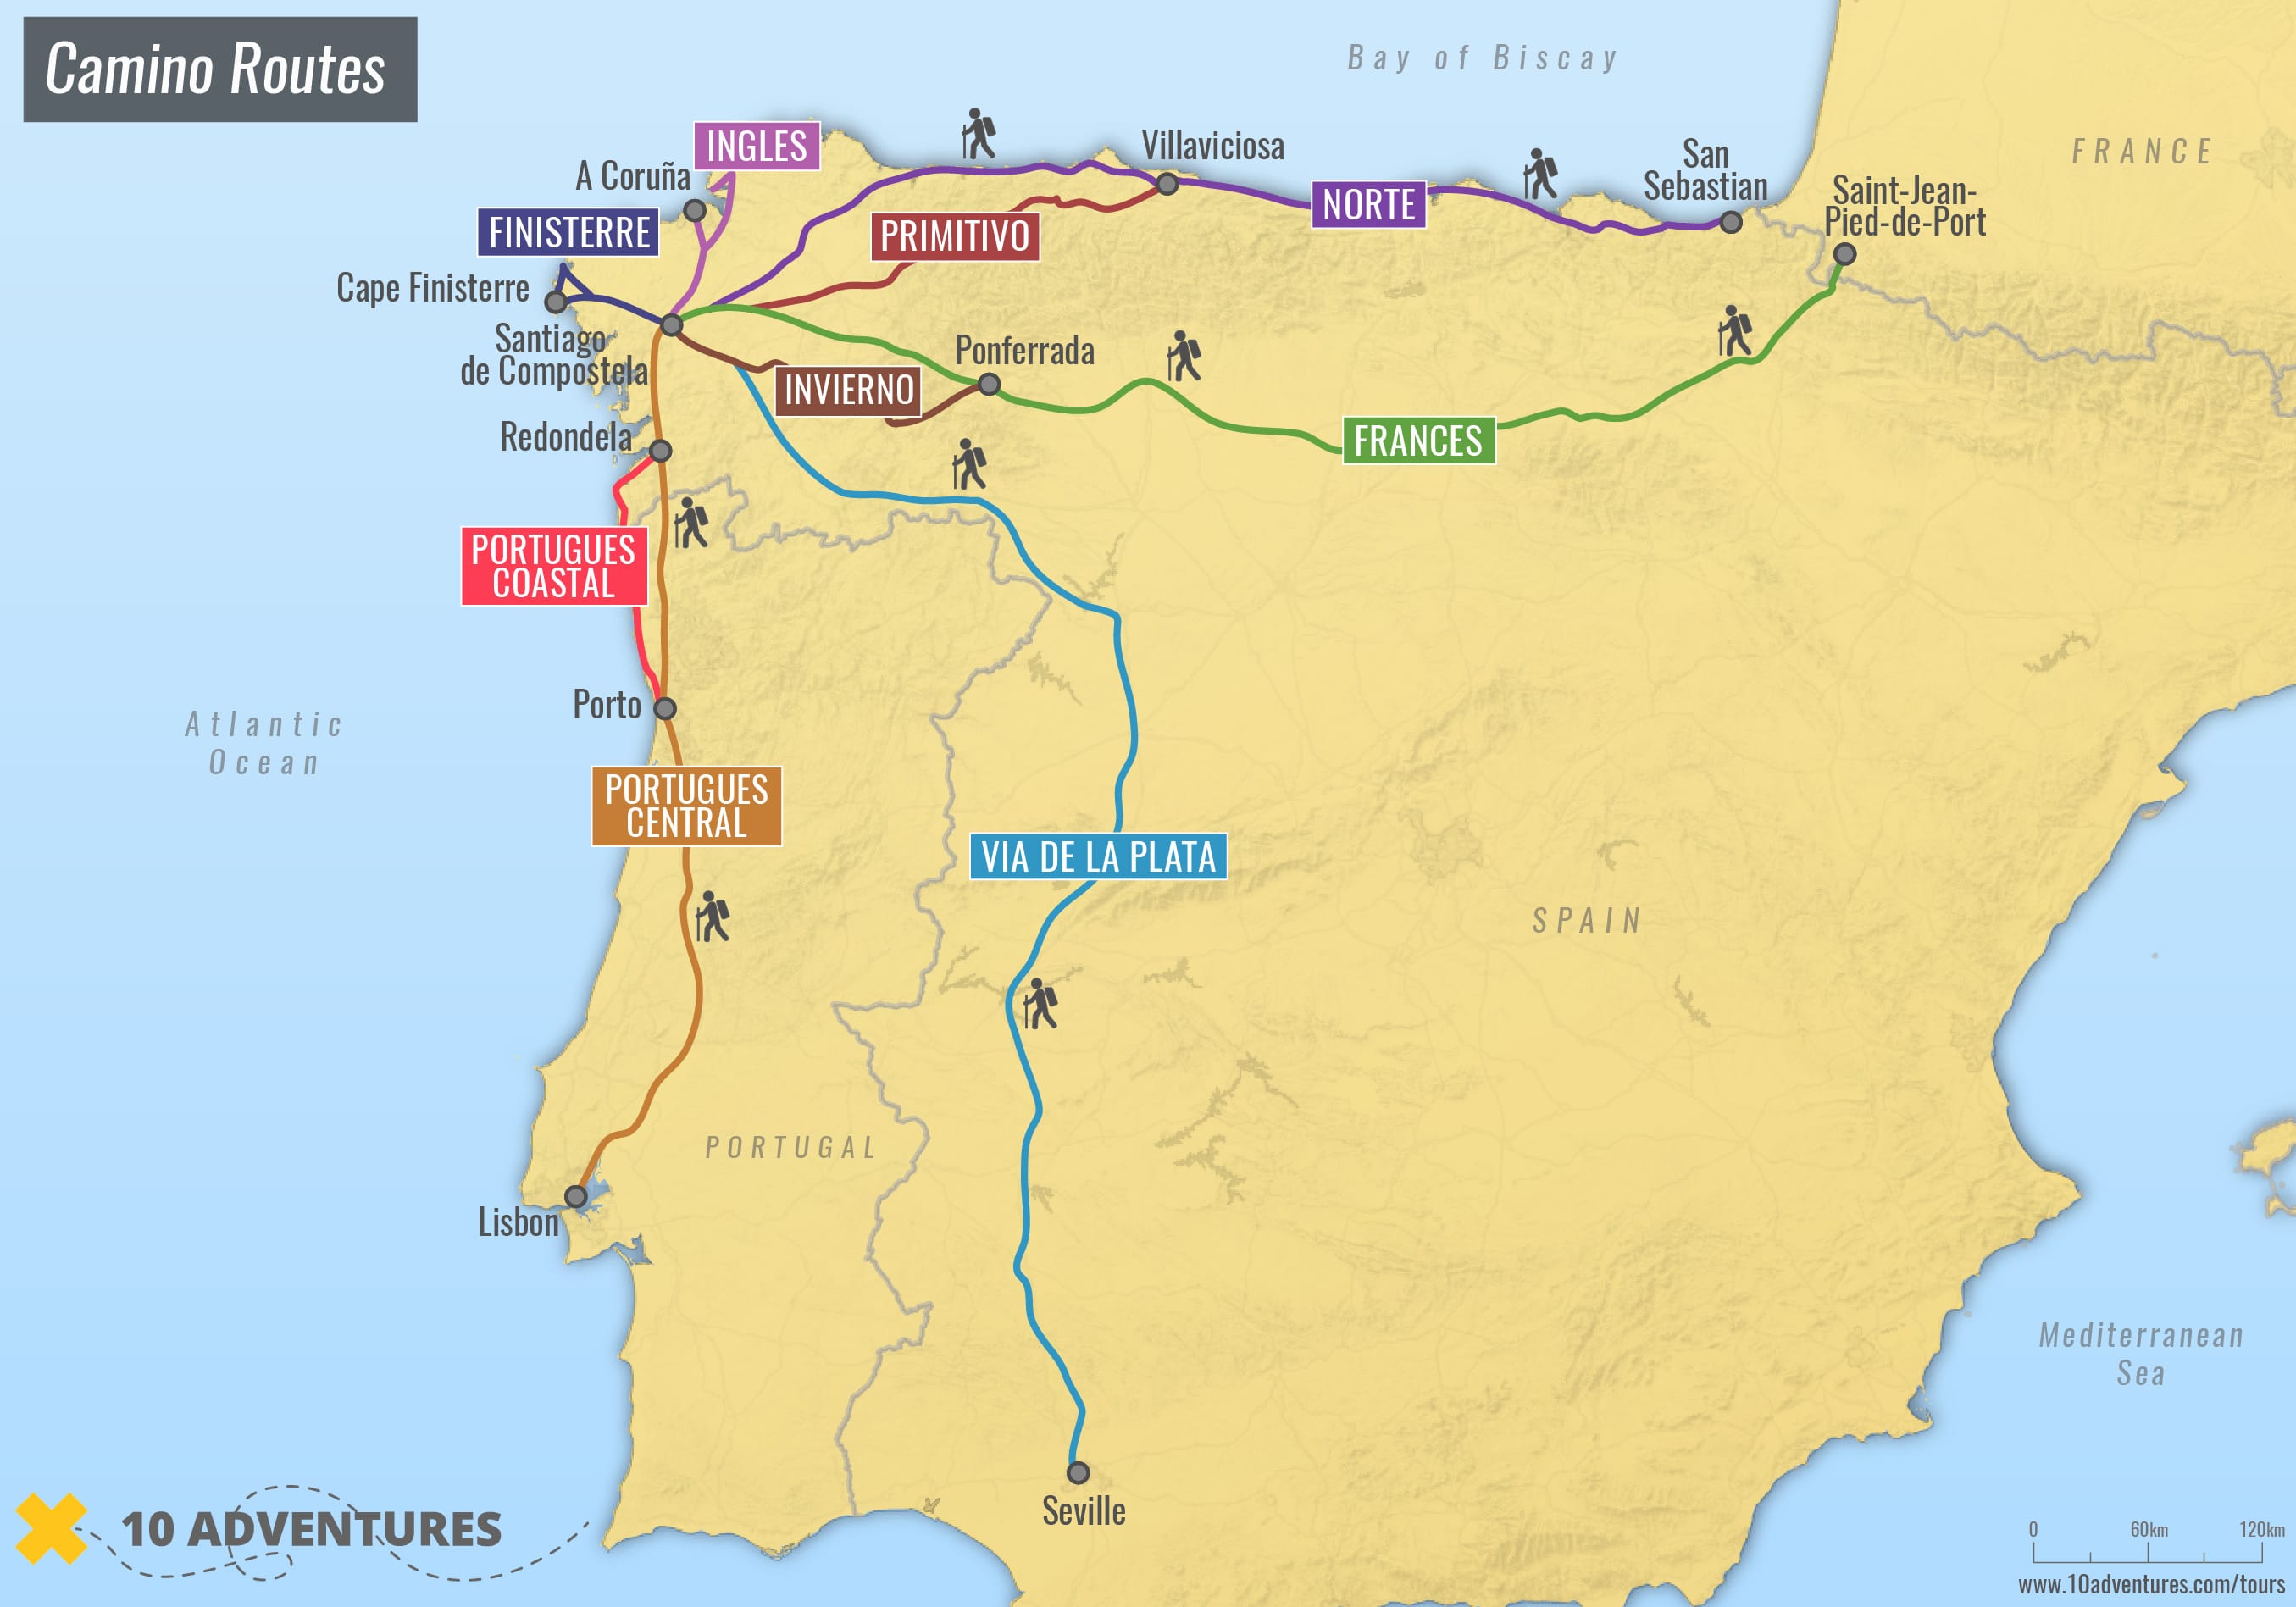 A map of different Camino de Santiago Routes